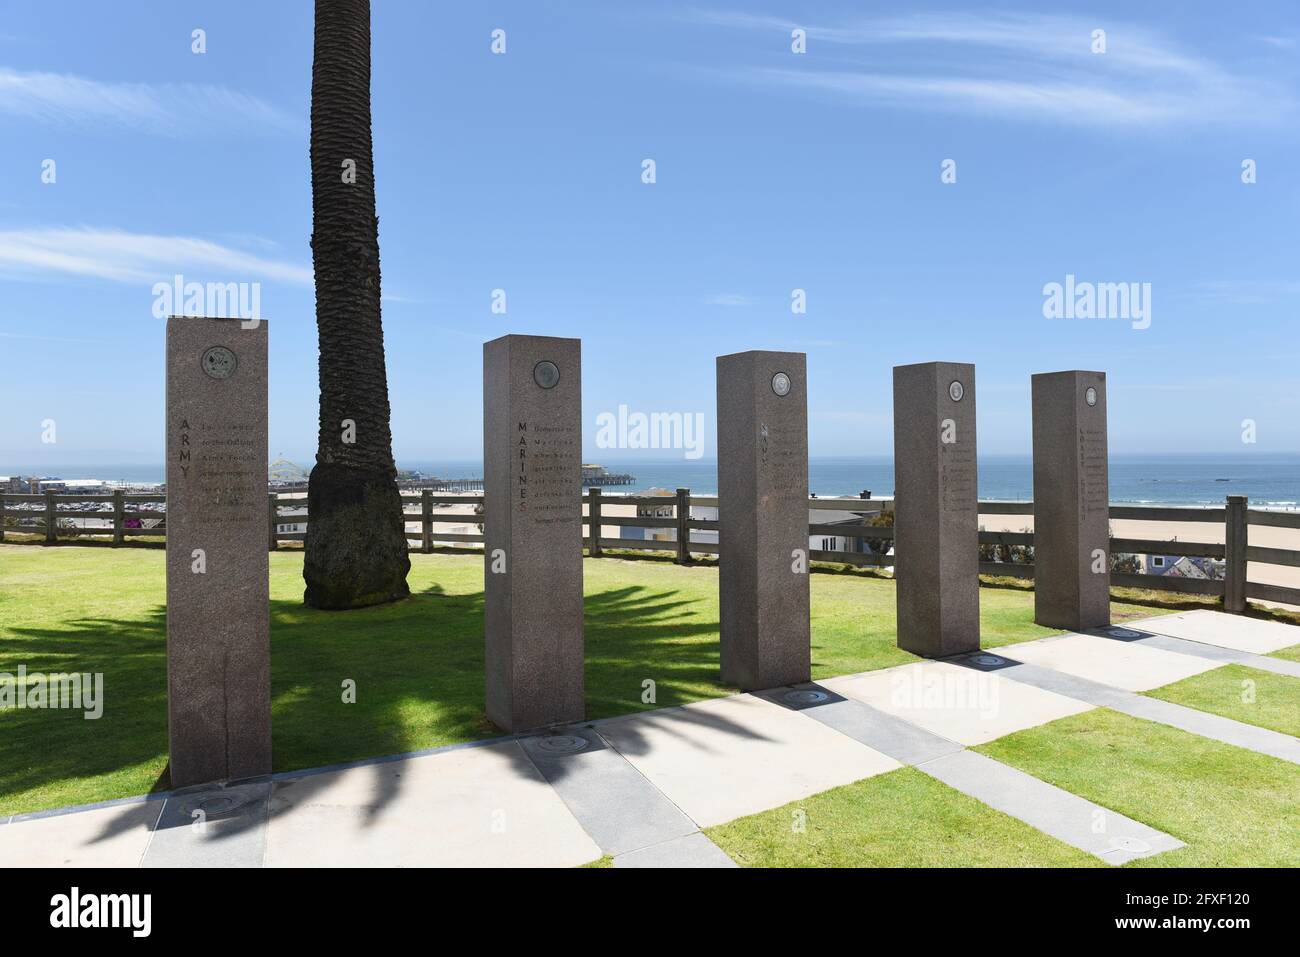 SANTA MONICA, KALIFORNIEN - 25. MAI 2021: Veterans Memorial im Palisades Park, mit Blick auf den Pazifik. Stockfoto